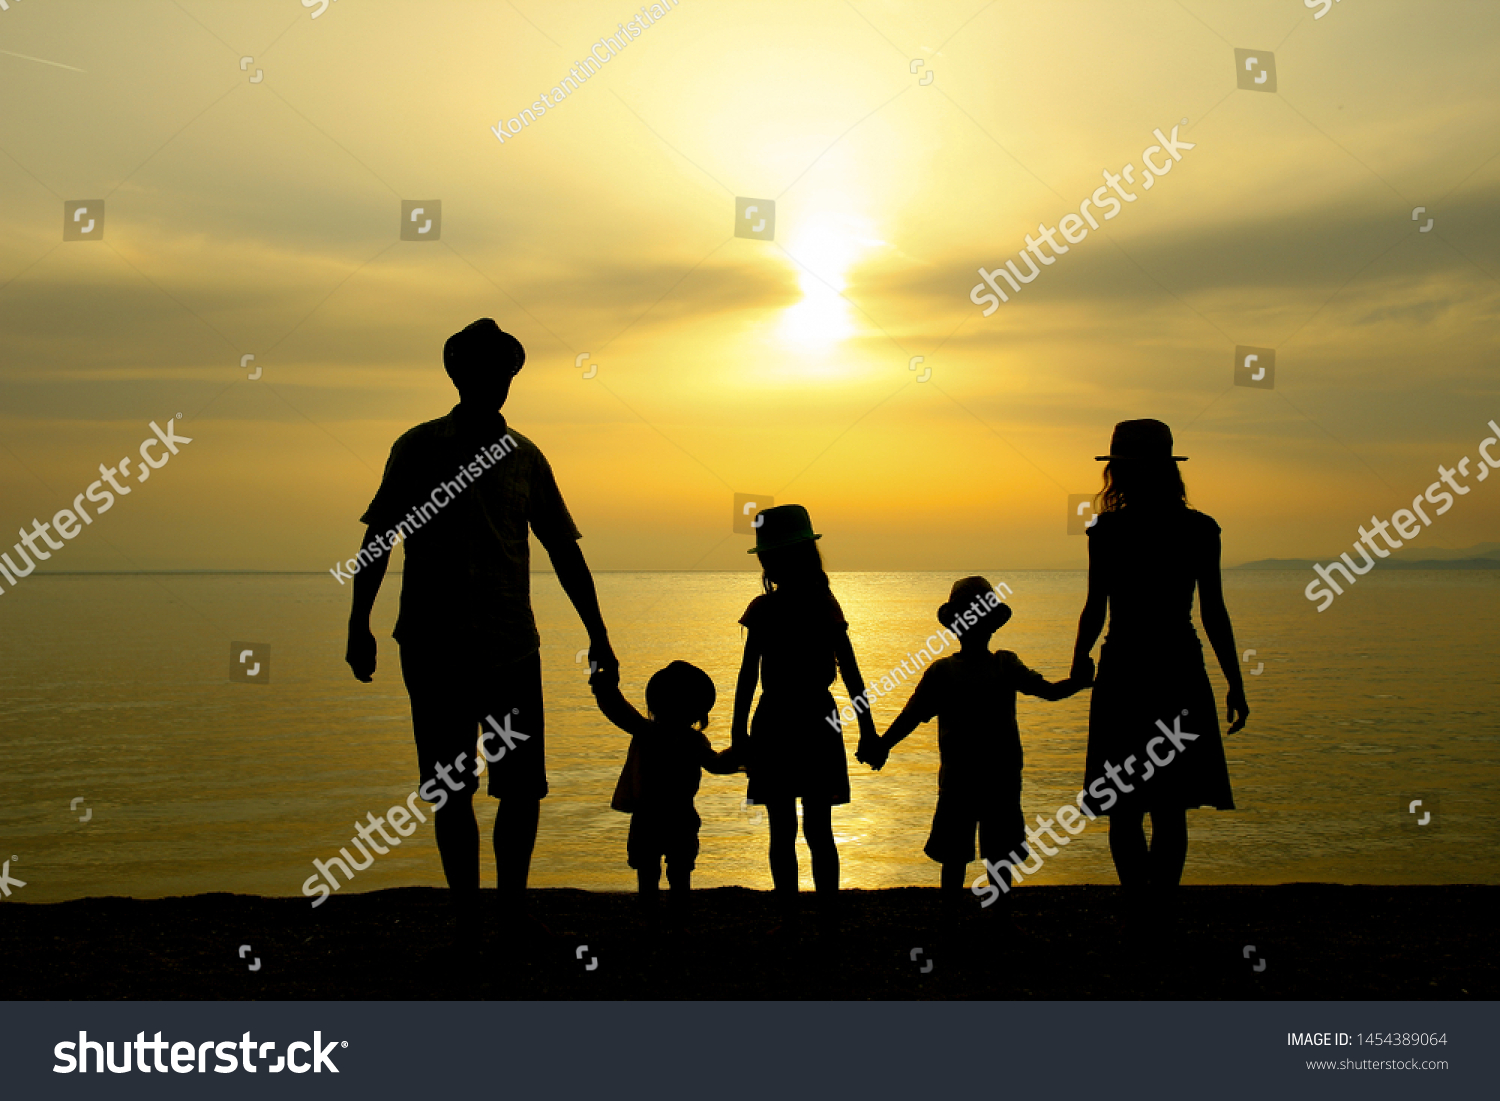 happy family silhouette